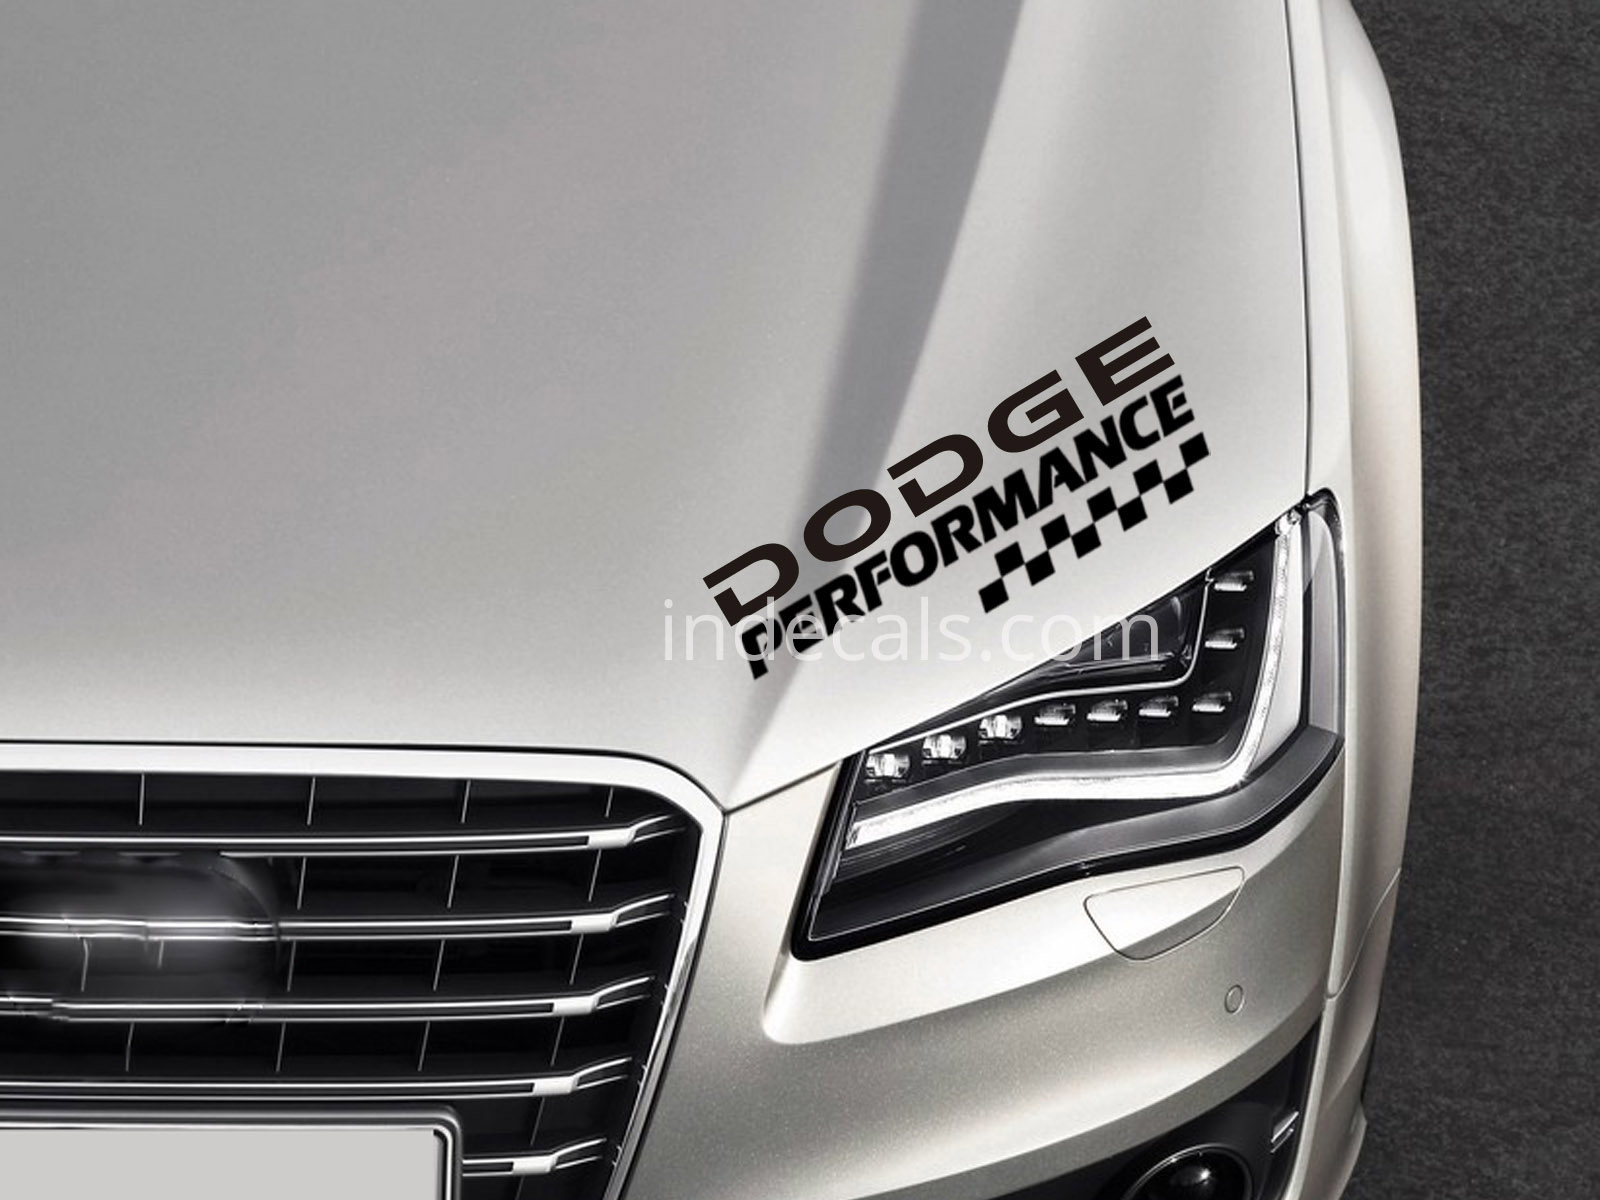 1 x Dodge Performance Sticker - Black